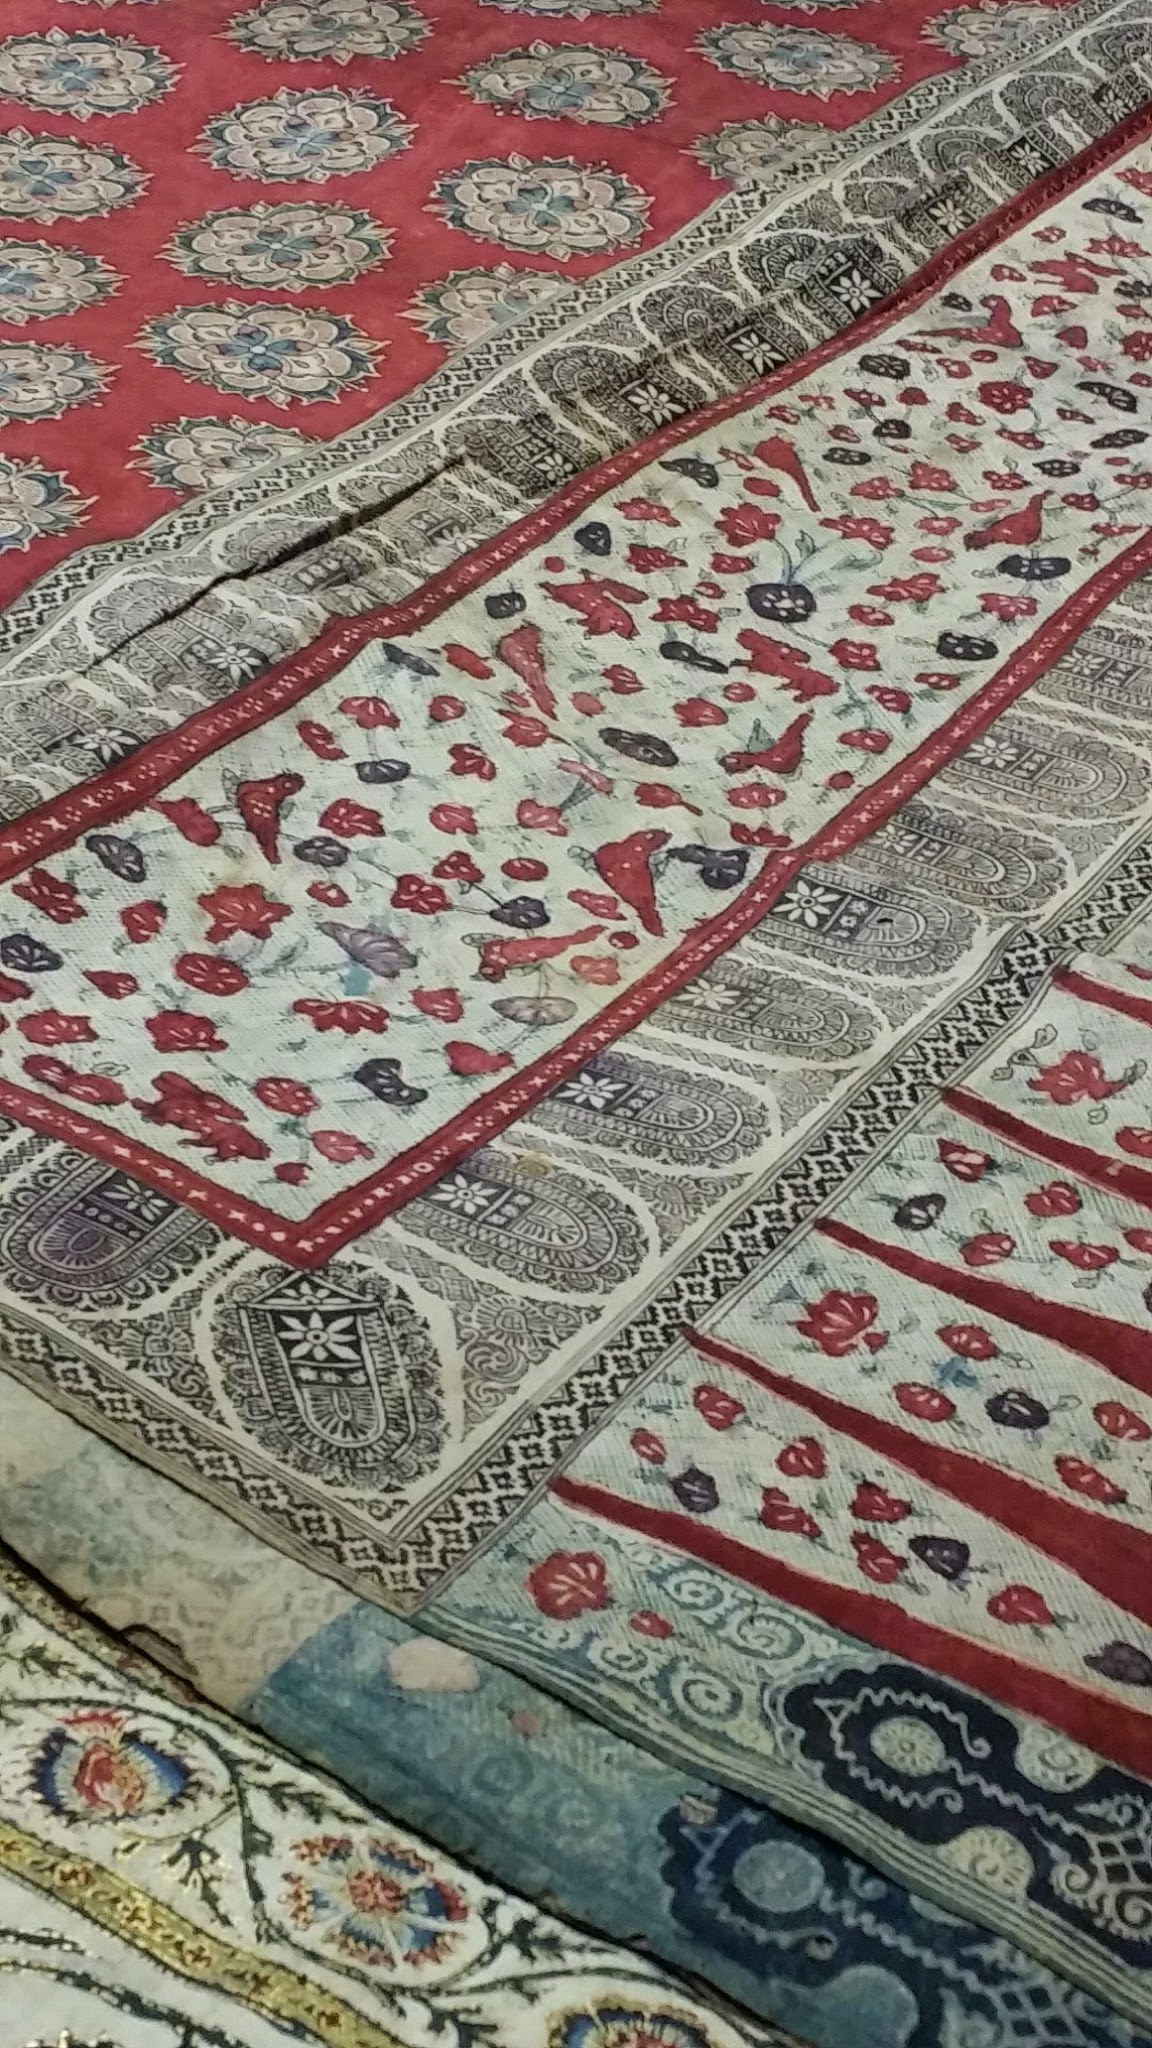 Indian Batik textiles 3.jpg